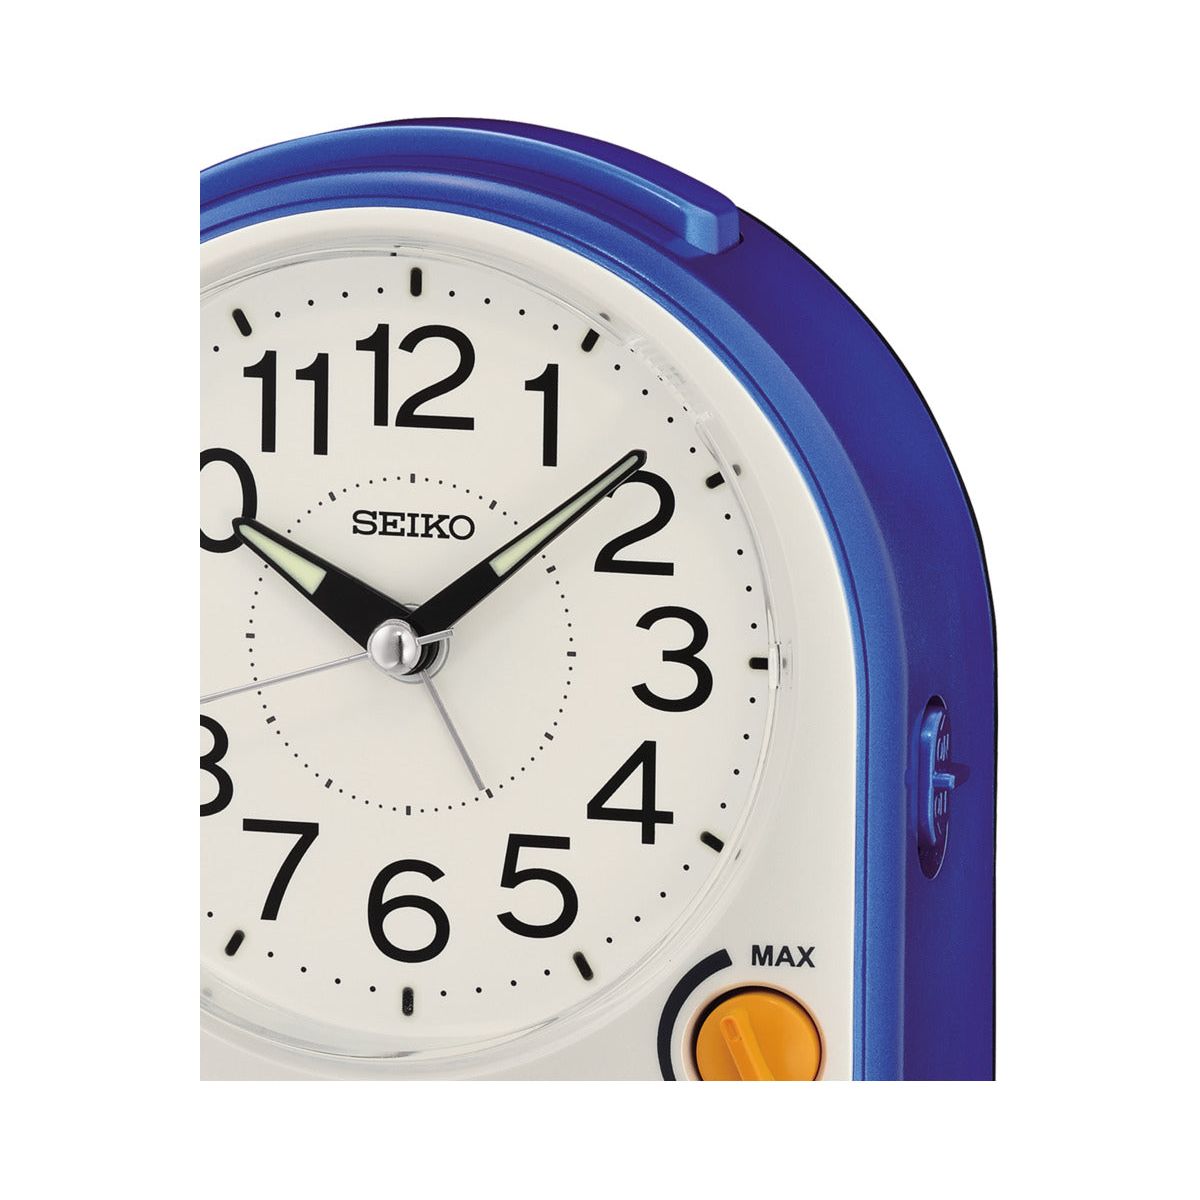 SEIKO CLOCKS SEIKO CLOCKS WATCHES Mod. QHE192L WATCHES seiko-clocks-watches-mod-qhe192l